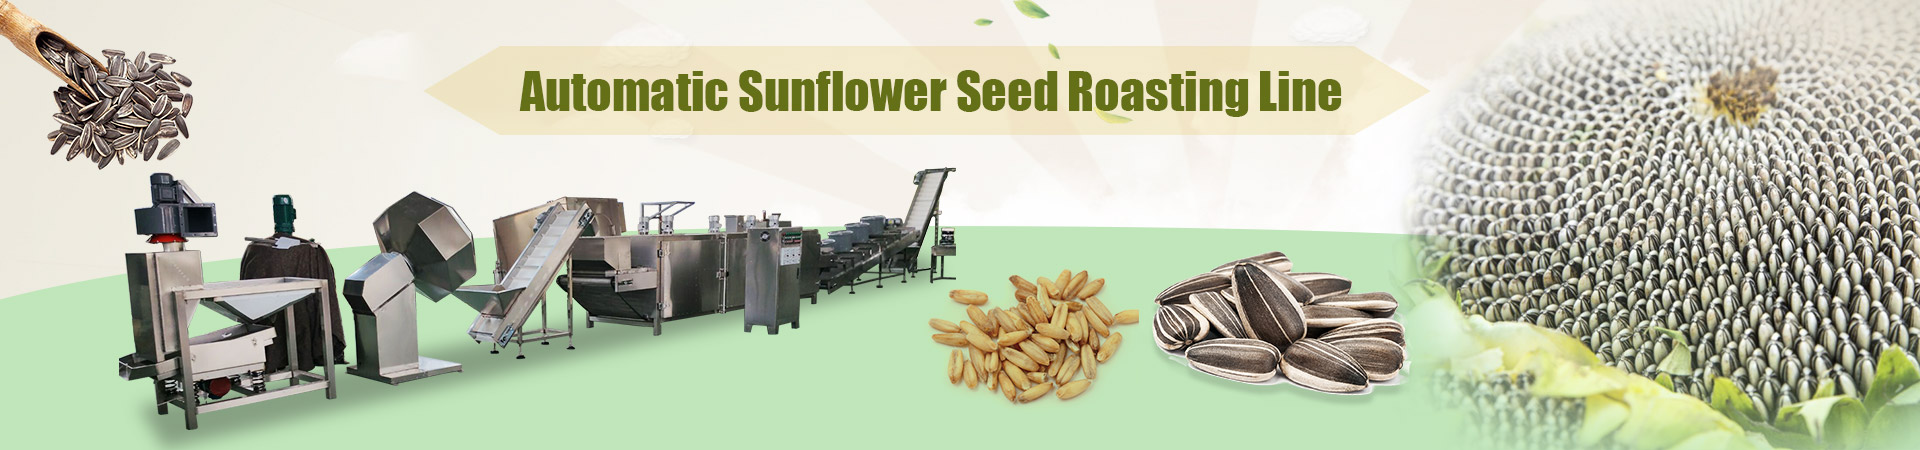 Automatic Sunflower Seed Roasting Line